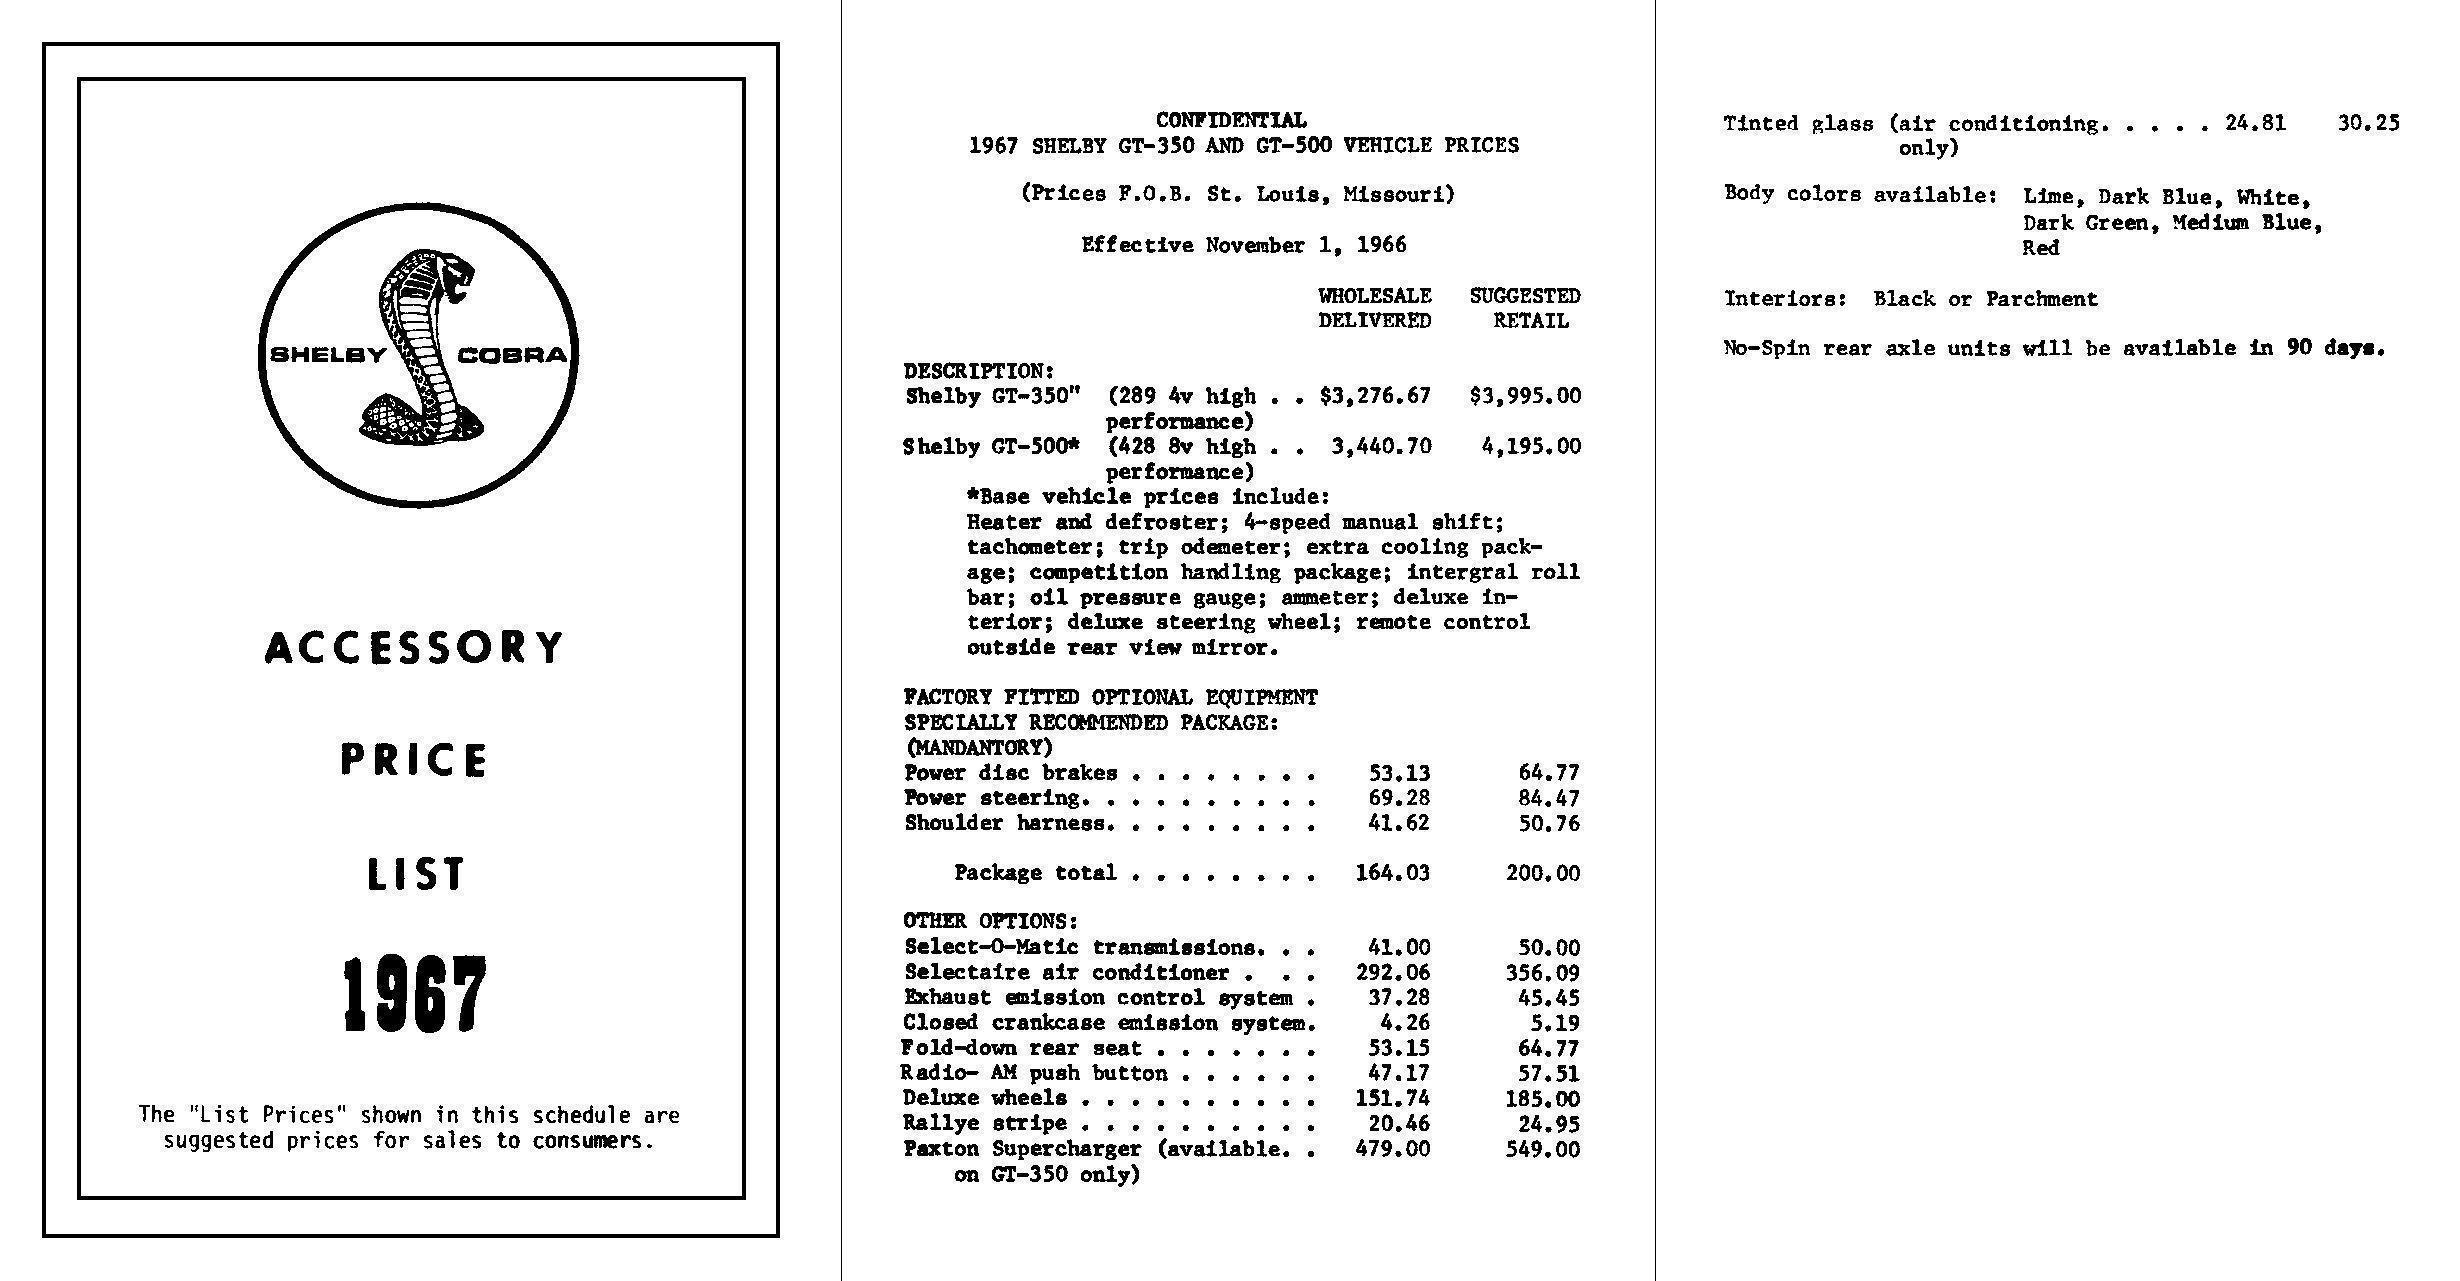 1967 Accessory Price List.jpg